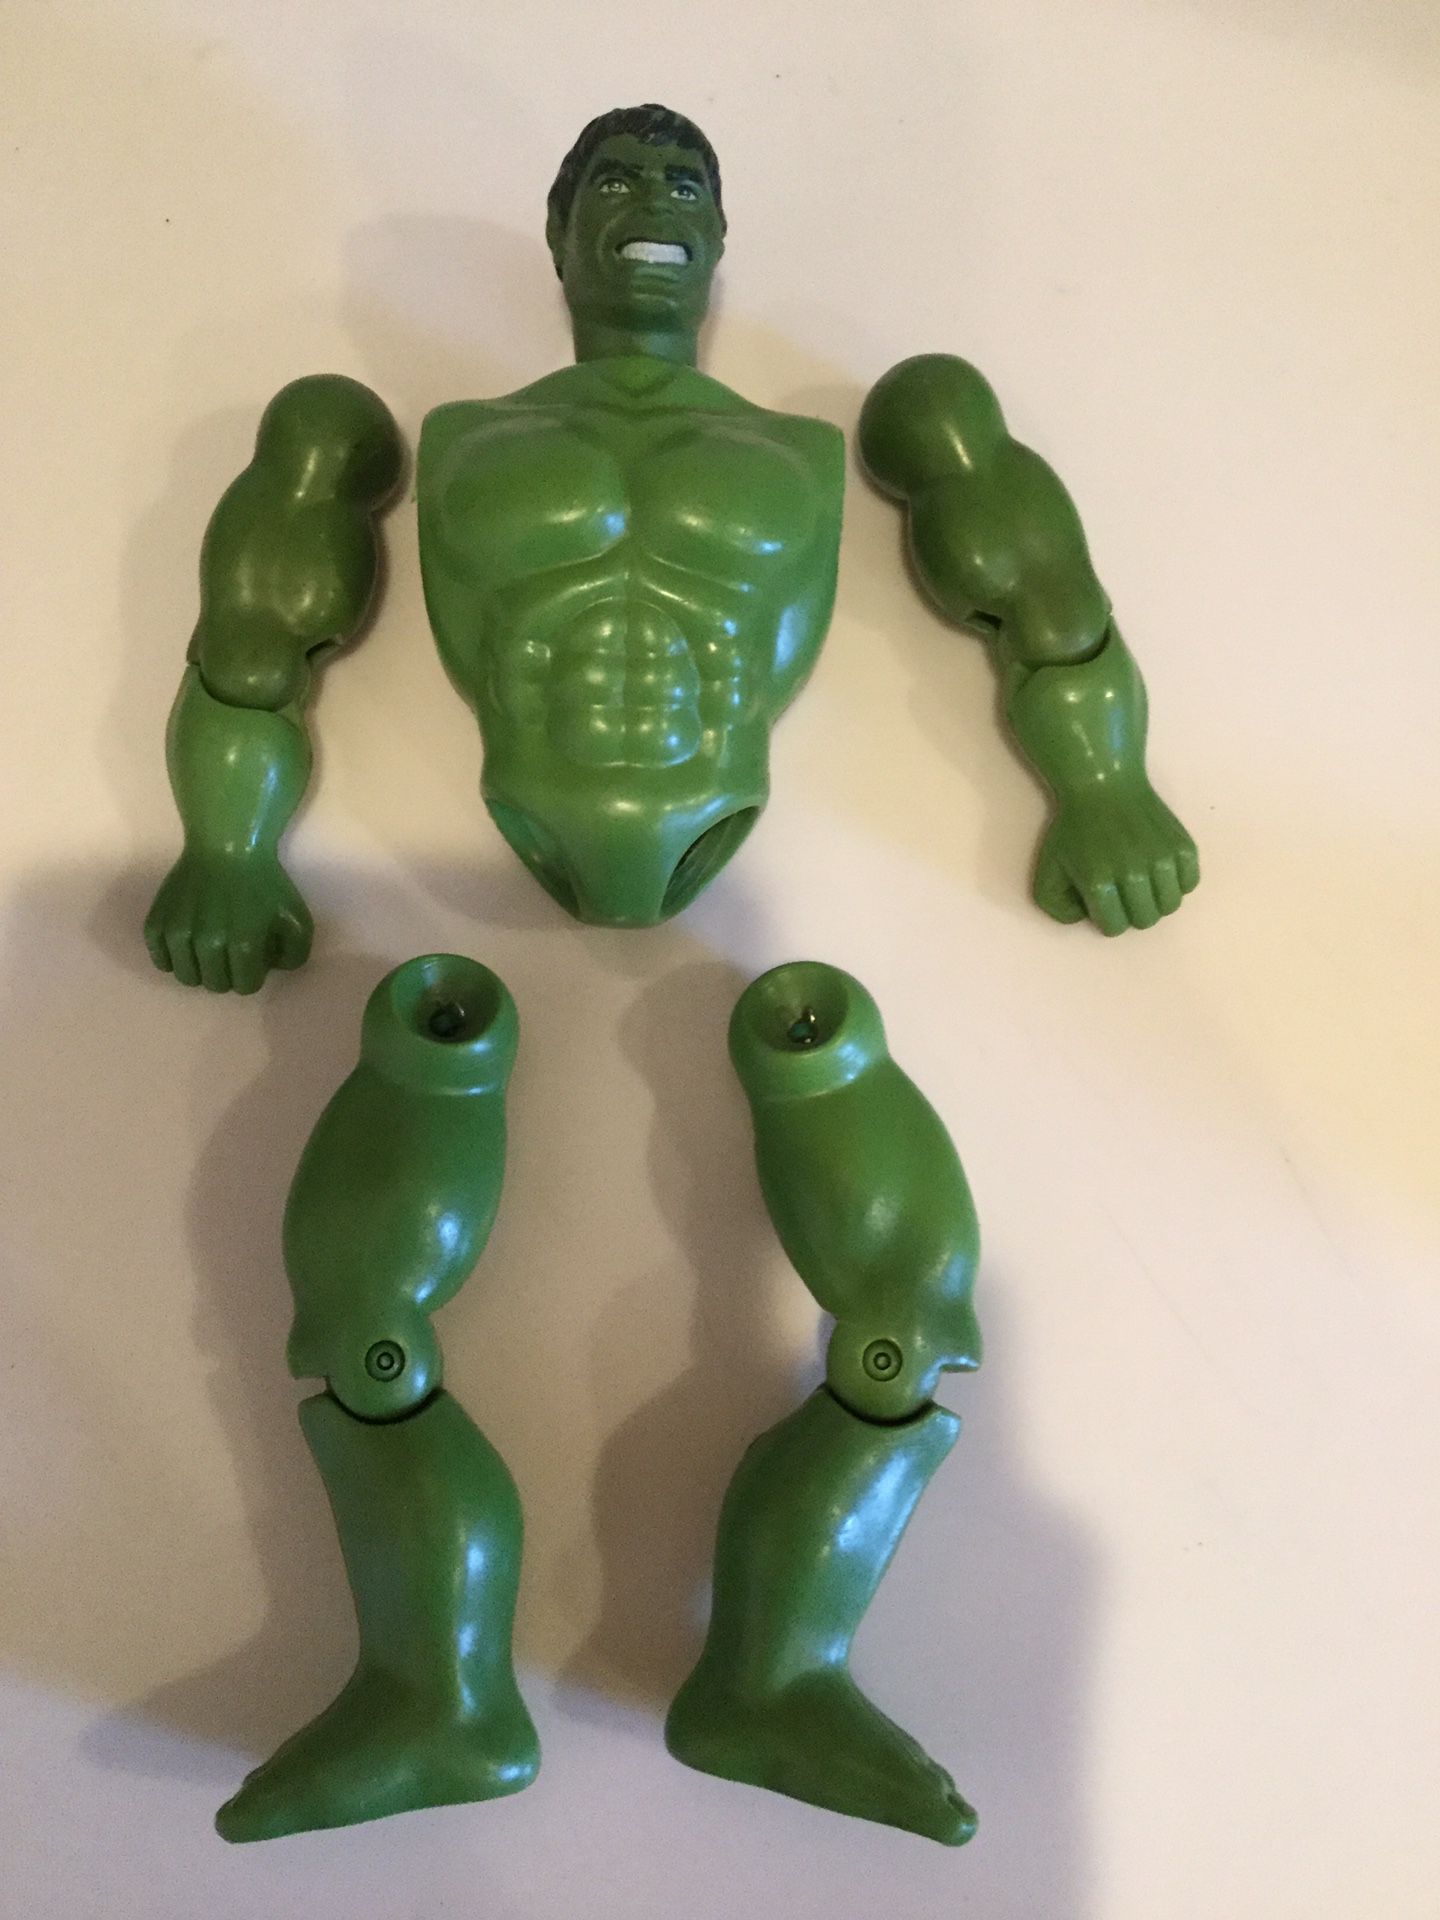 1979 Vintage Mego Hulk Action Figure needs repair